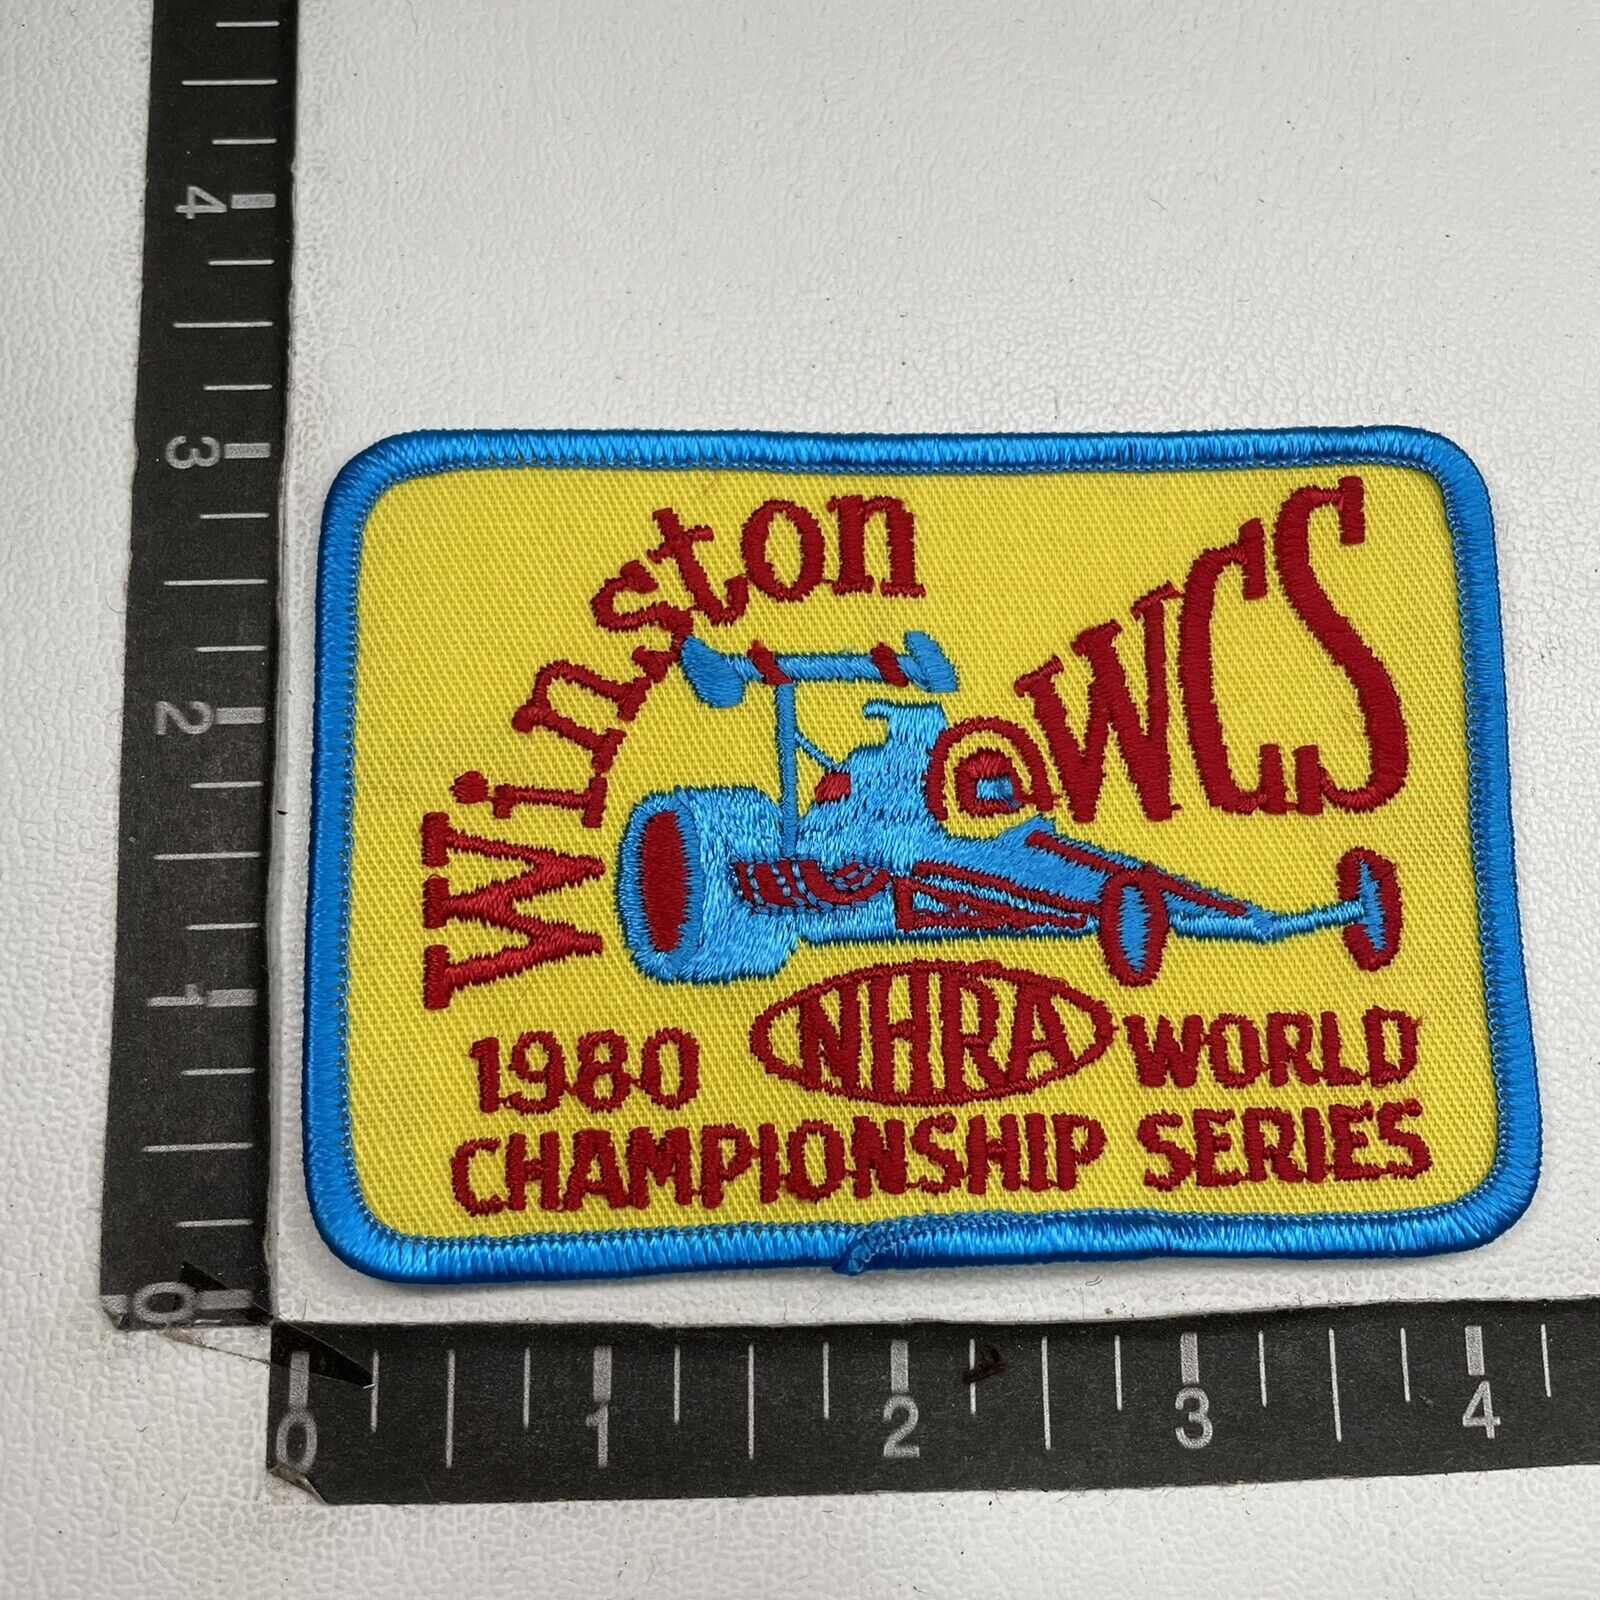 Vtg 1980 Tobacco WINSTON WORLD CHAMPIONSHIP SERIES NHRA Hot Rod Race Patch OODT